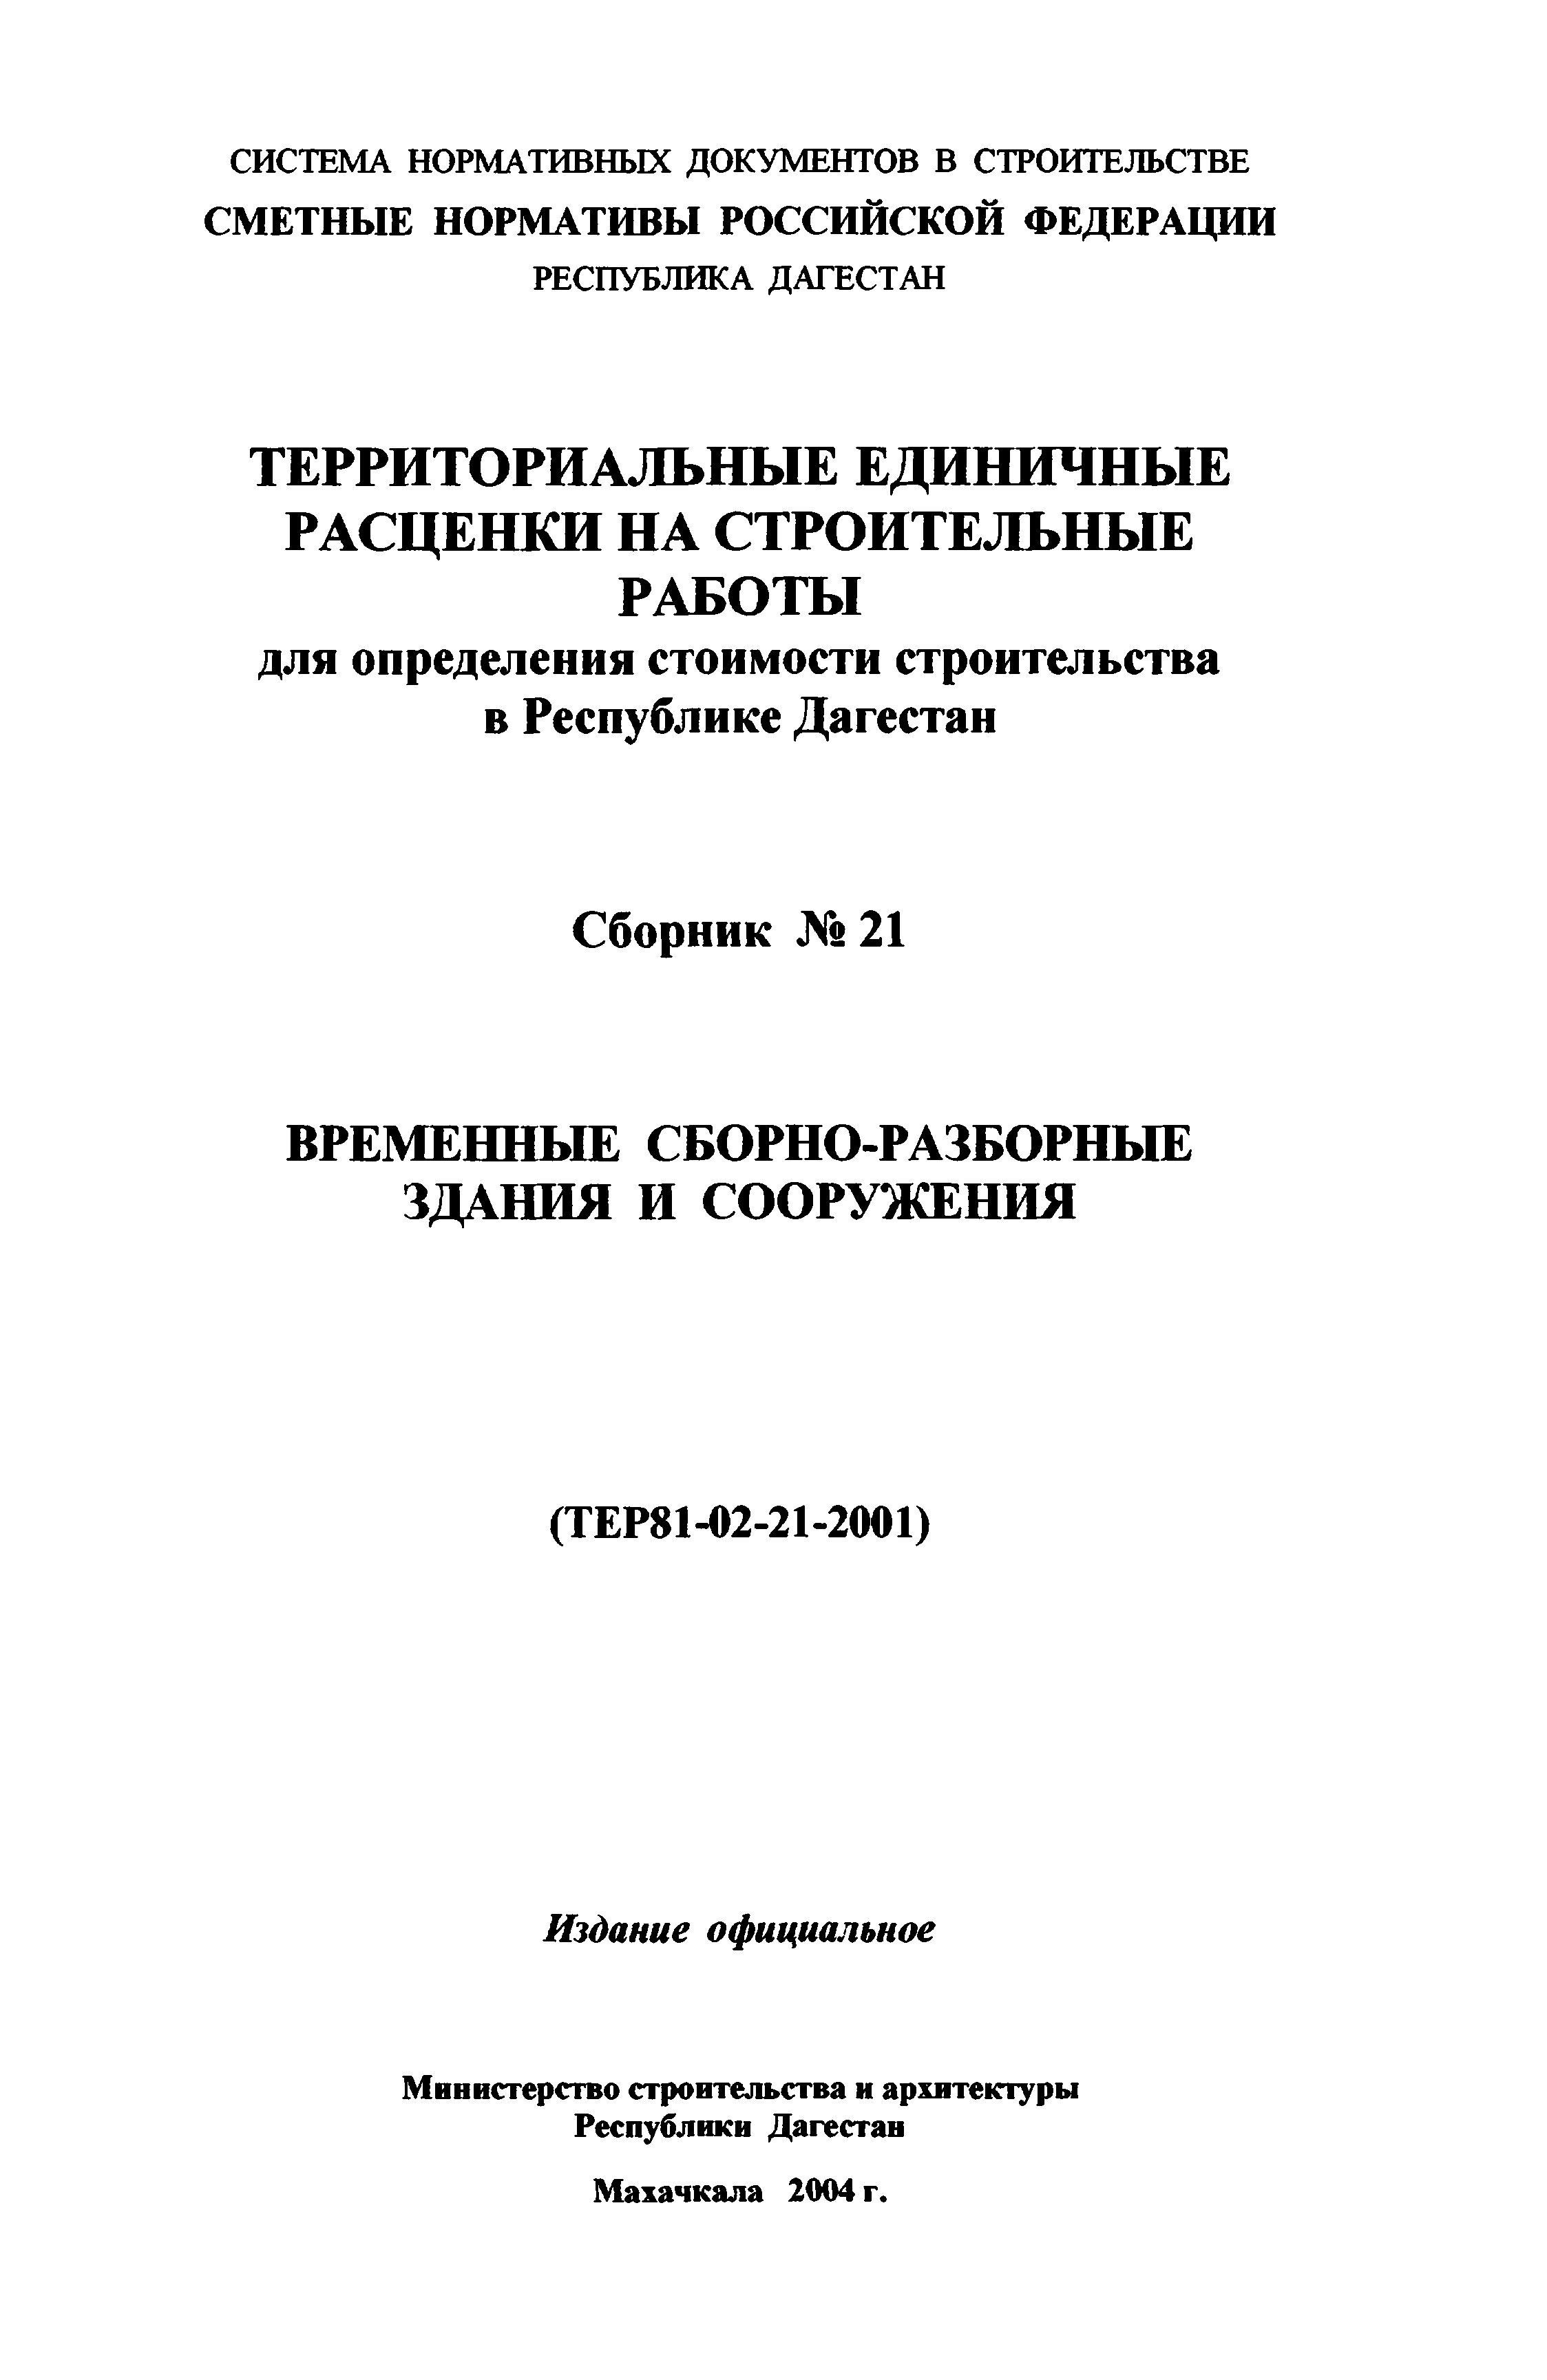 ТЕР Республика Дагестан 2001-21